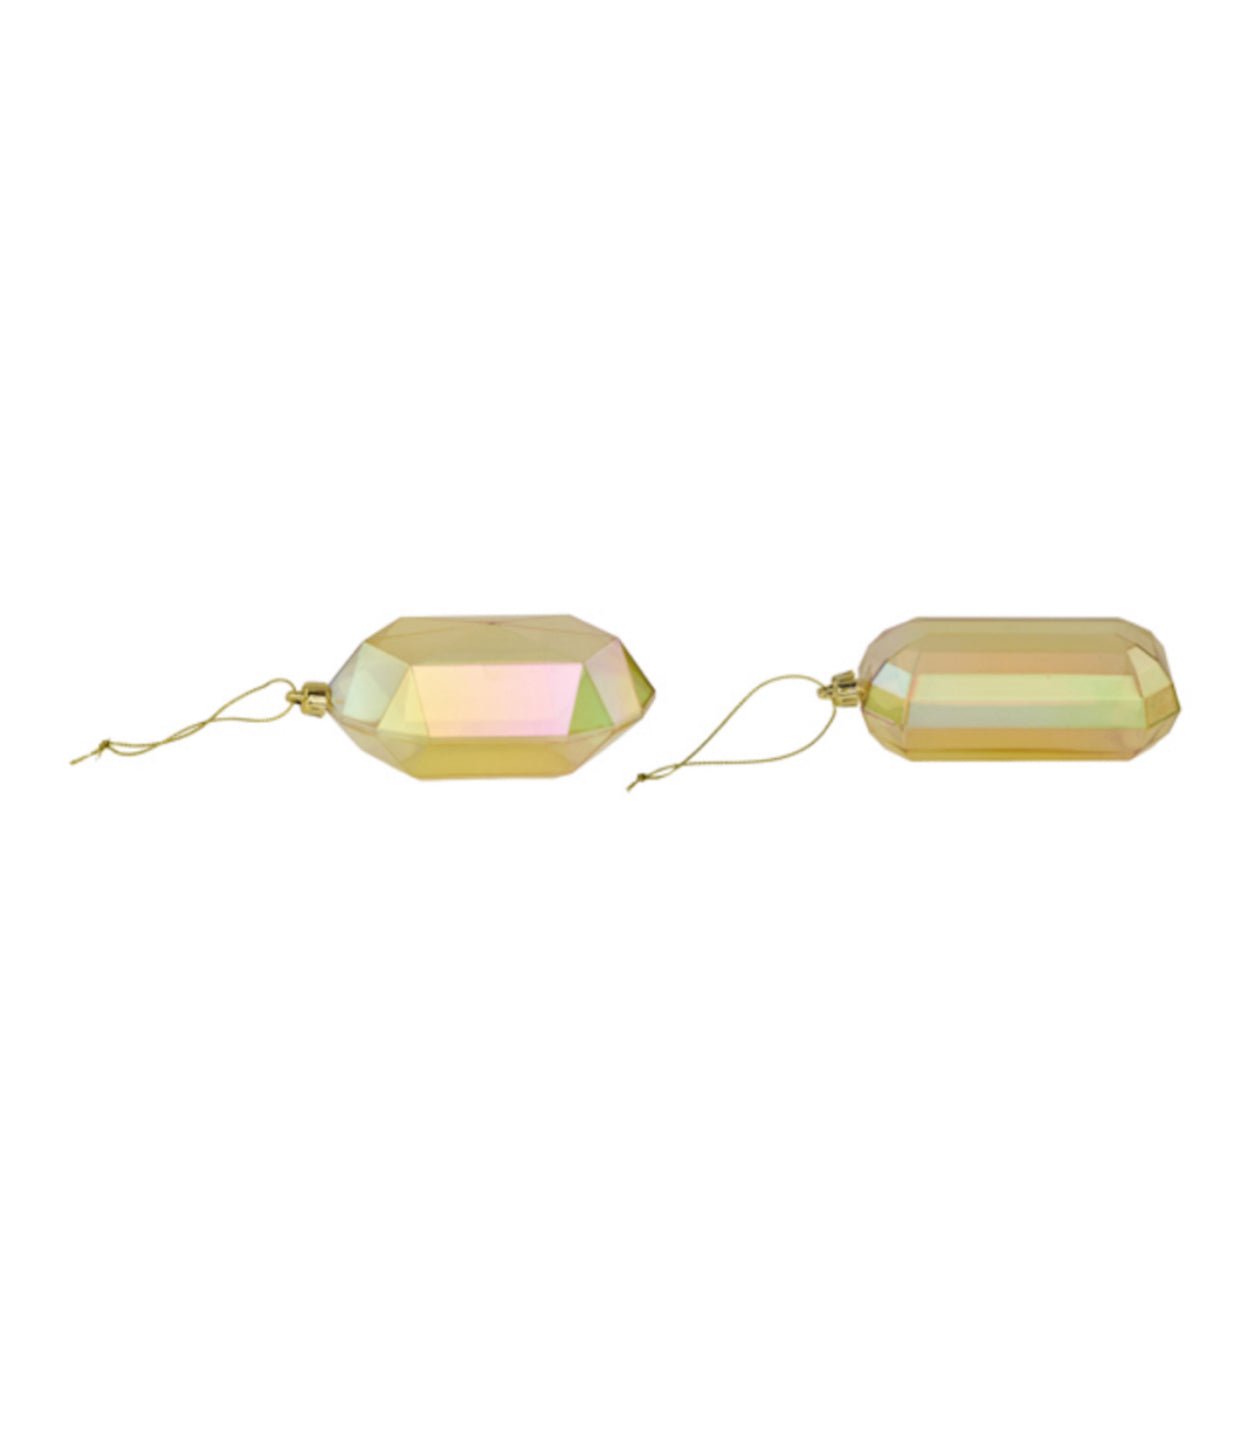 Gems ornaments - 2 assorted iridescent gold - Greenery MarketXJ552108